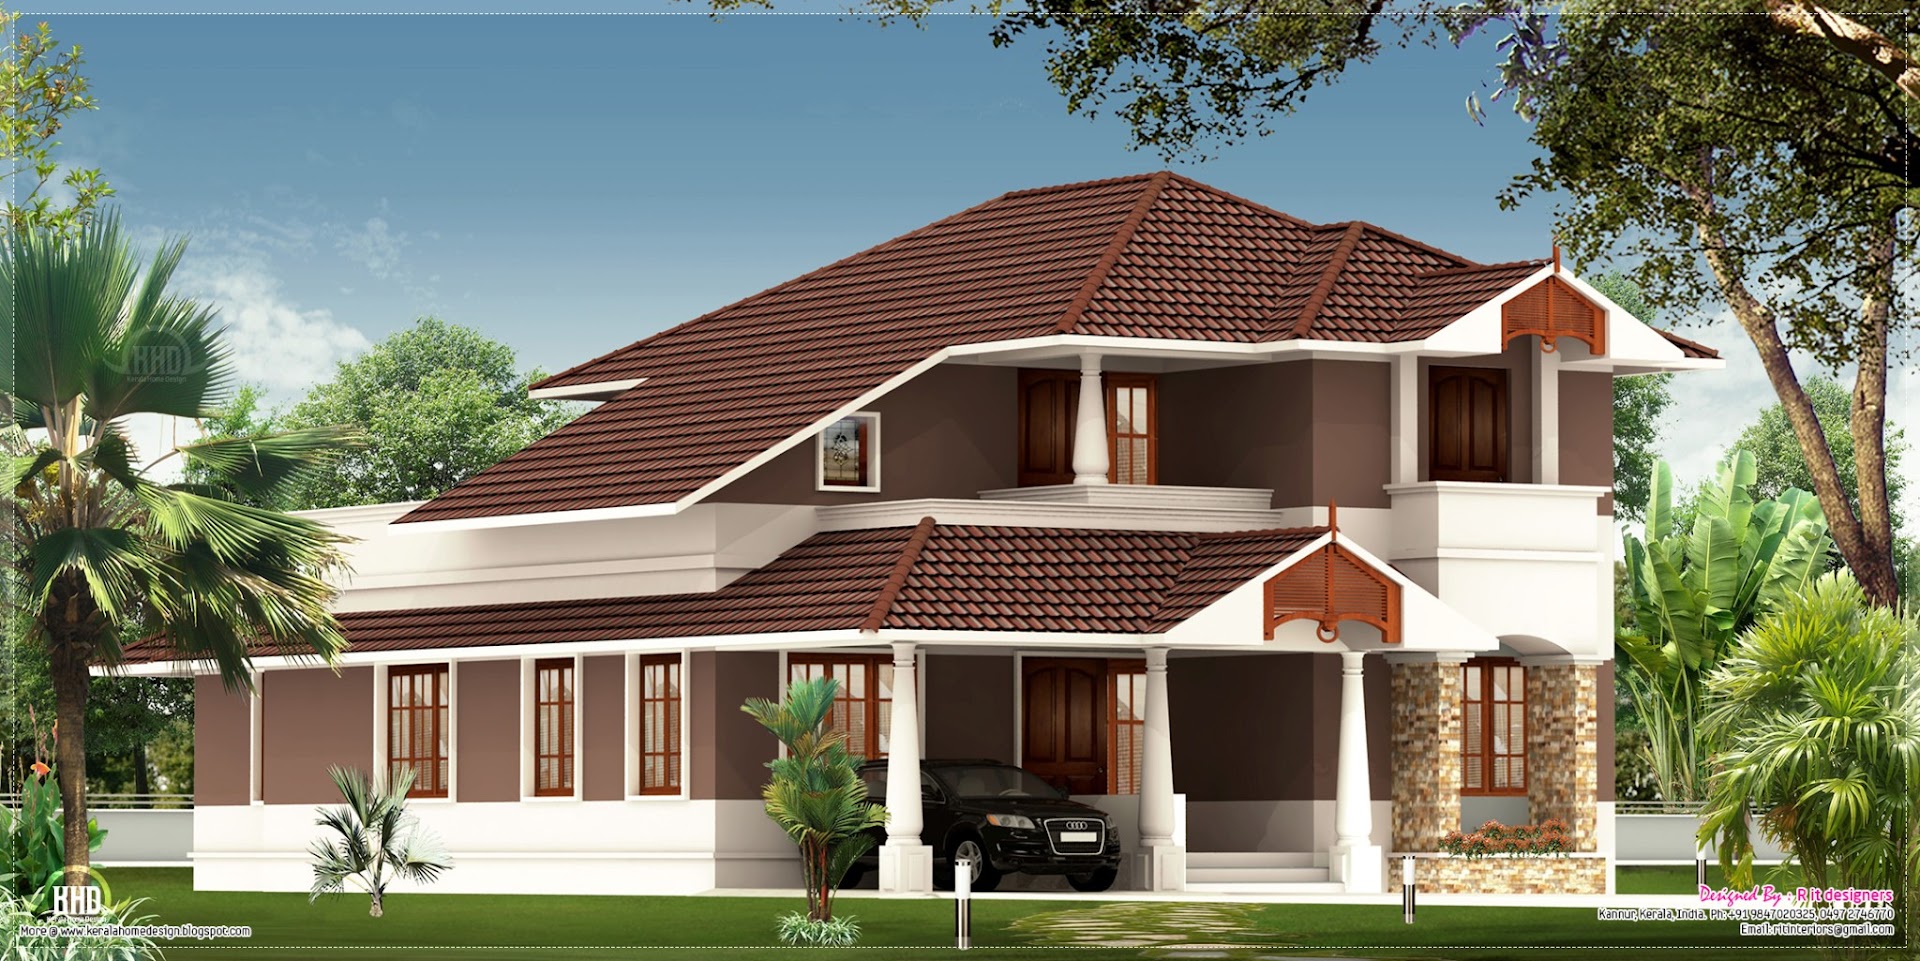 2100 sq feet house exterior design Kerala home design 